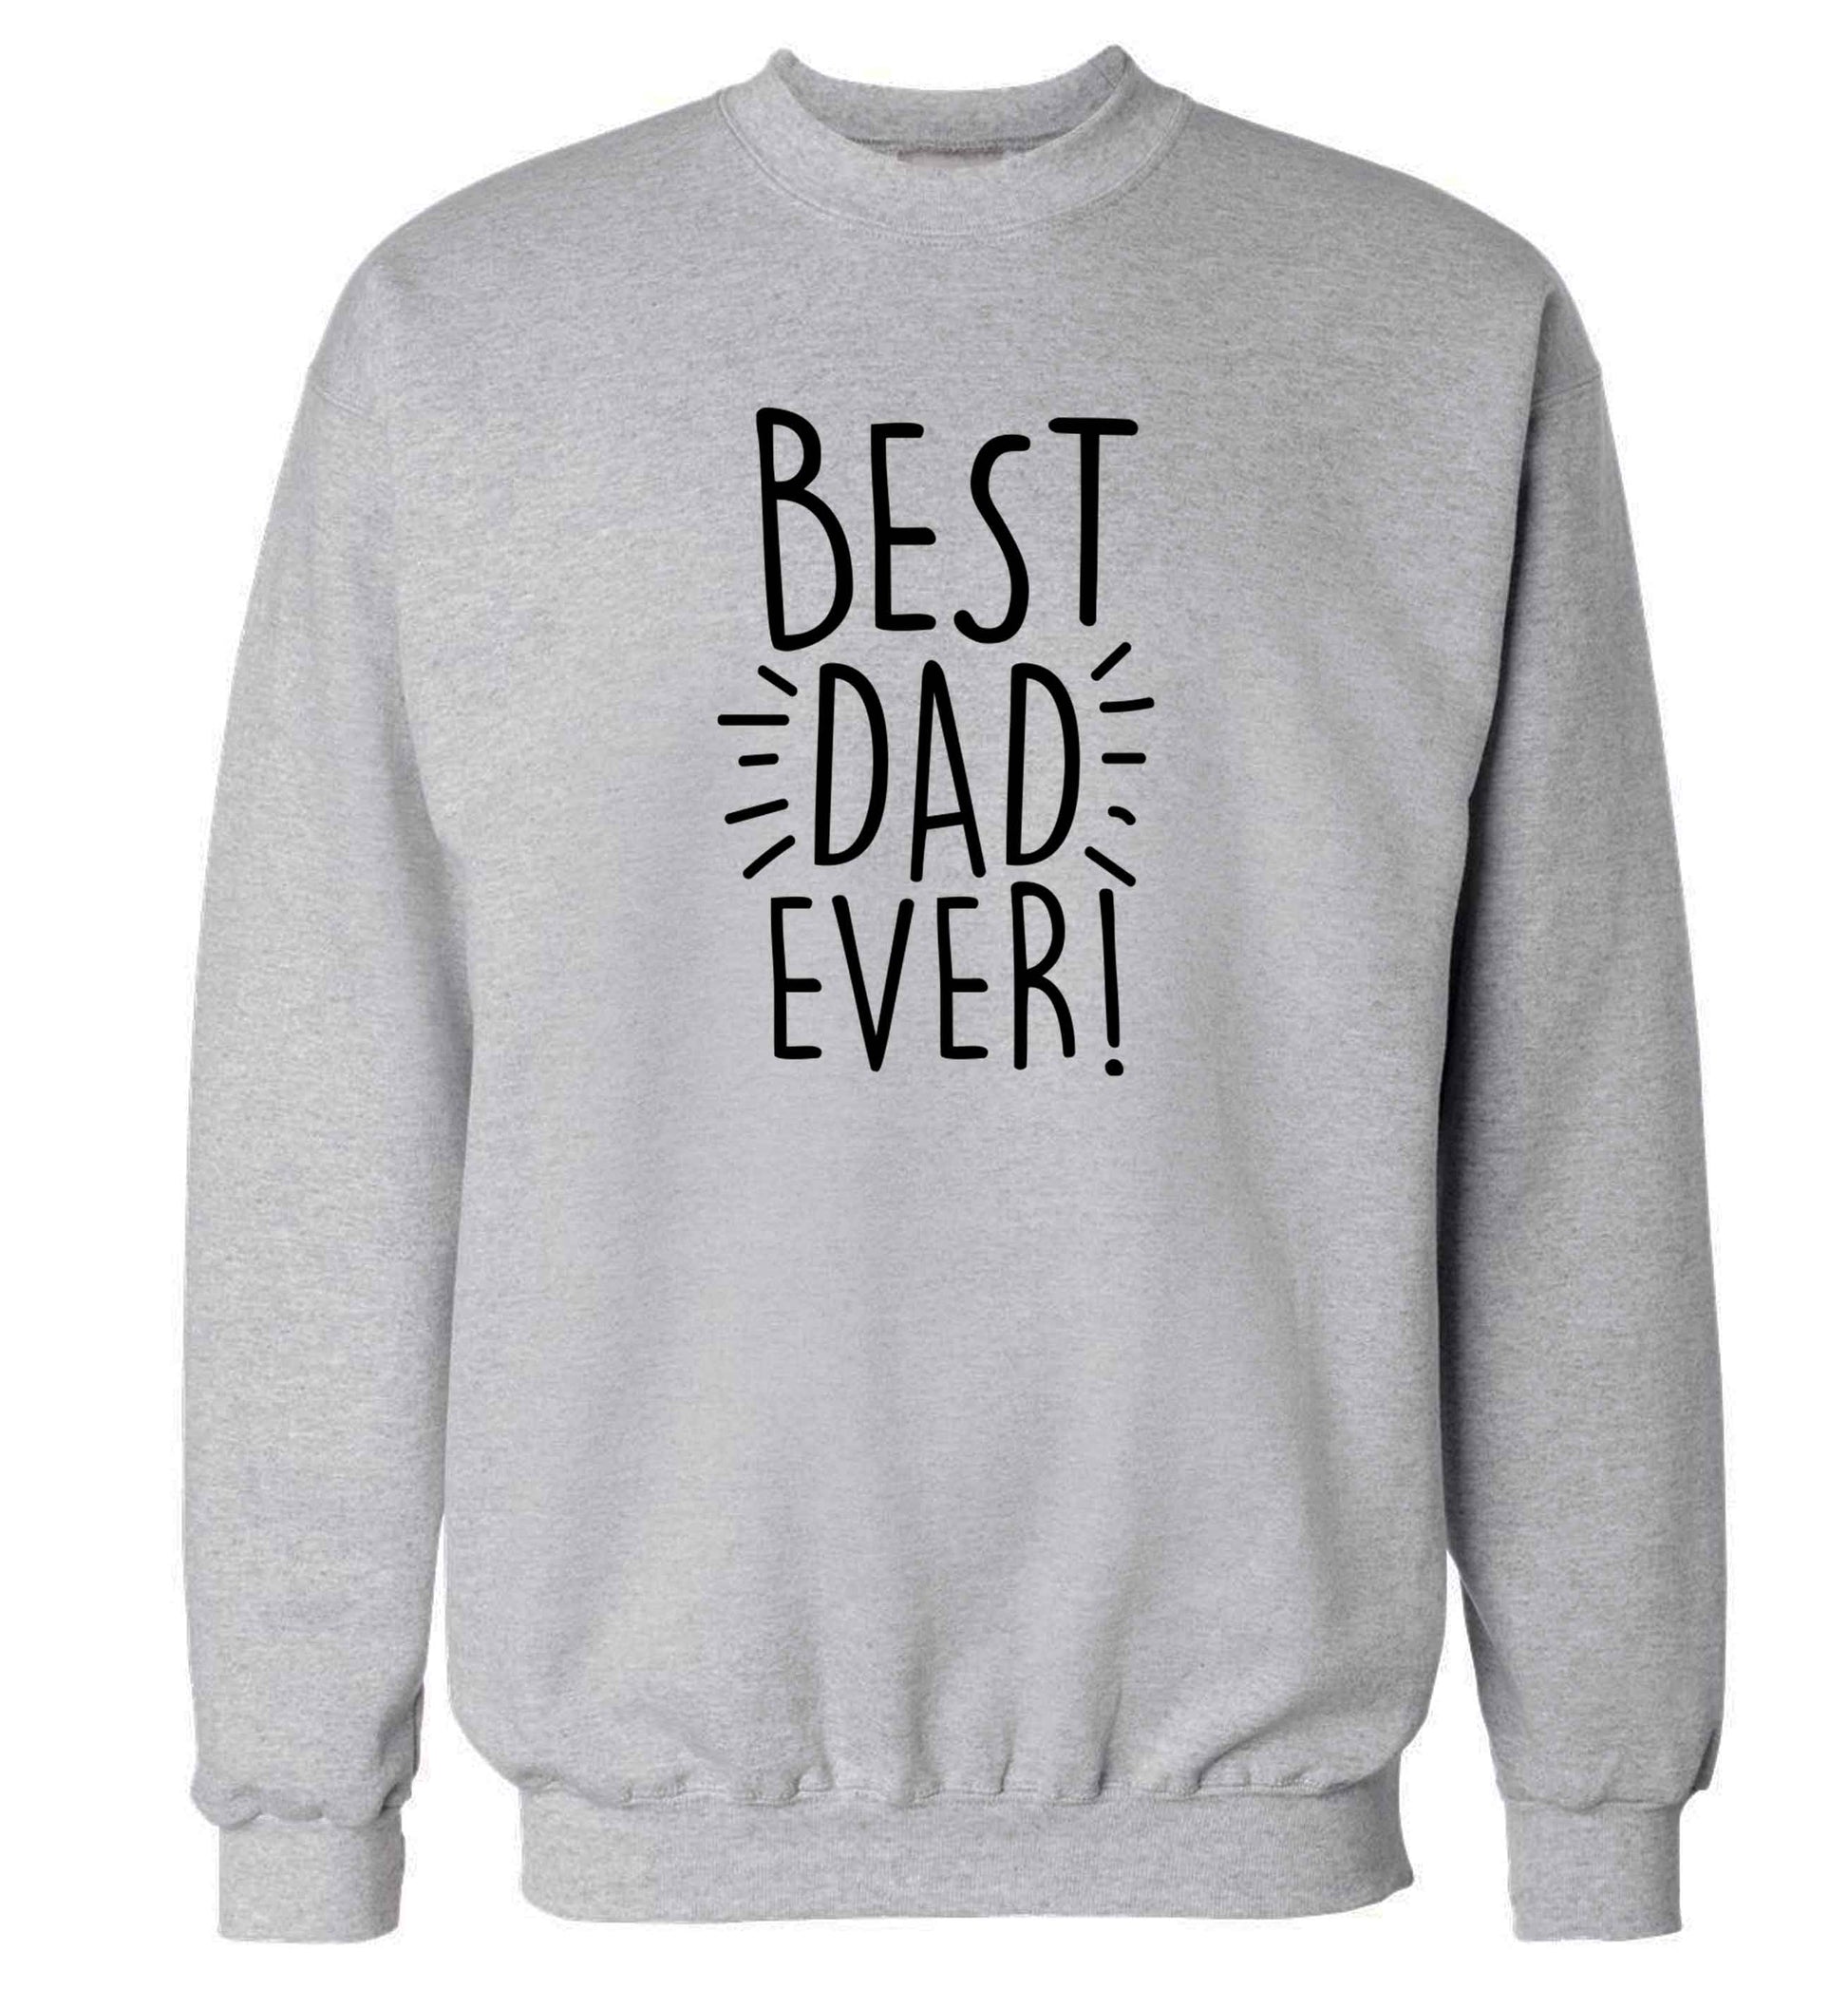 Best dad ever! adult's unisex grey sweater 2XL